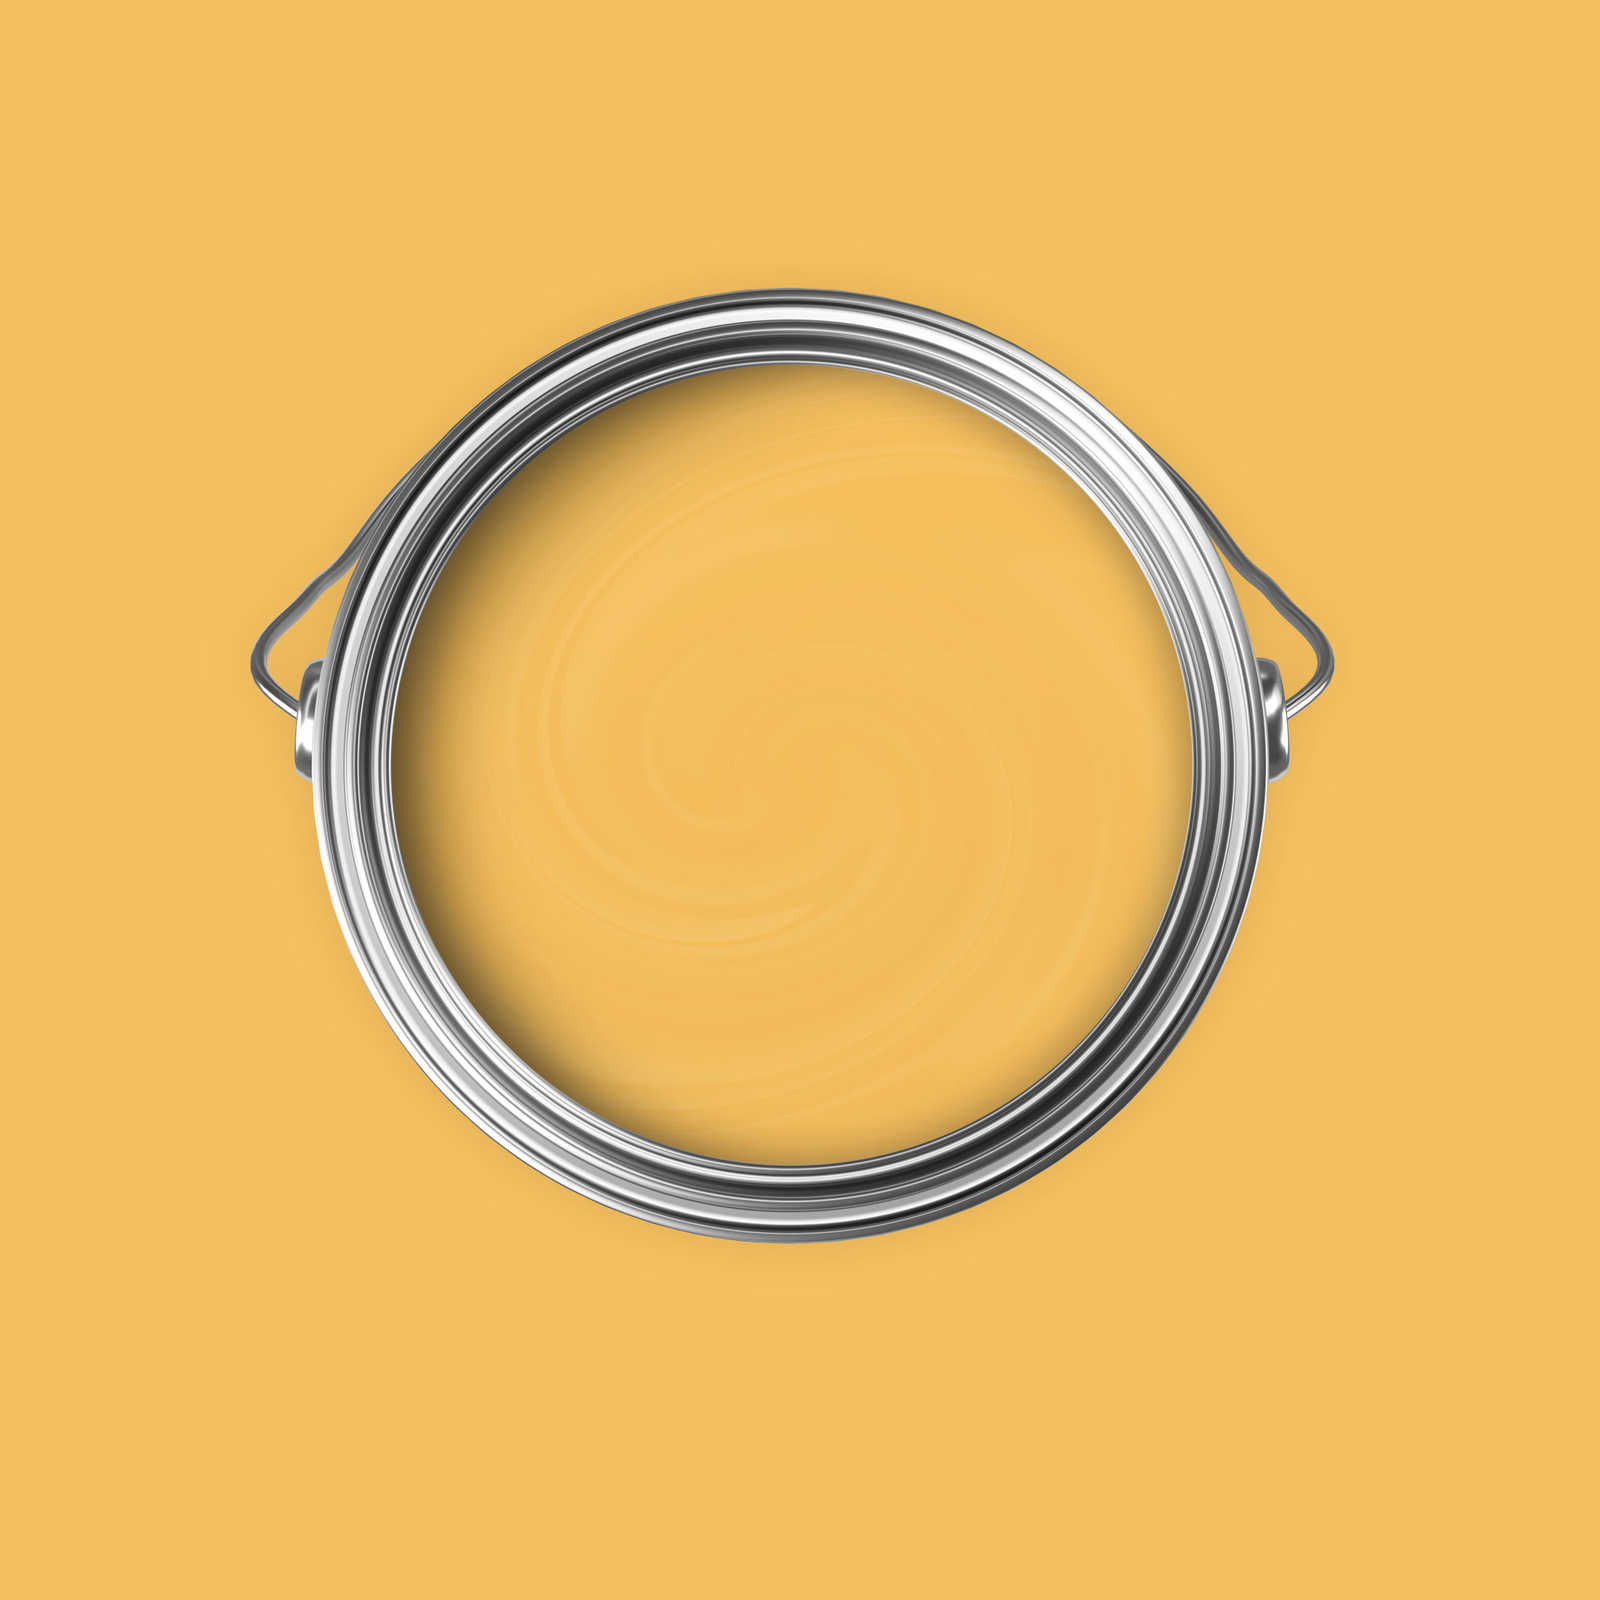             Premium Muurverf Stimulerend Zonnegeel »Juicy Yellow« NW805 – 5 liter
        